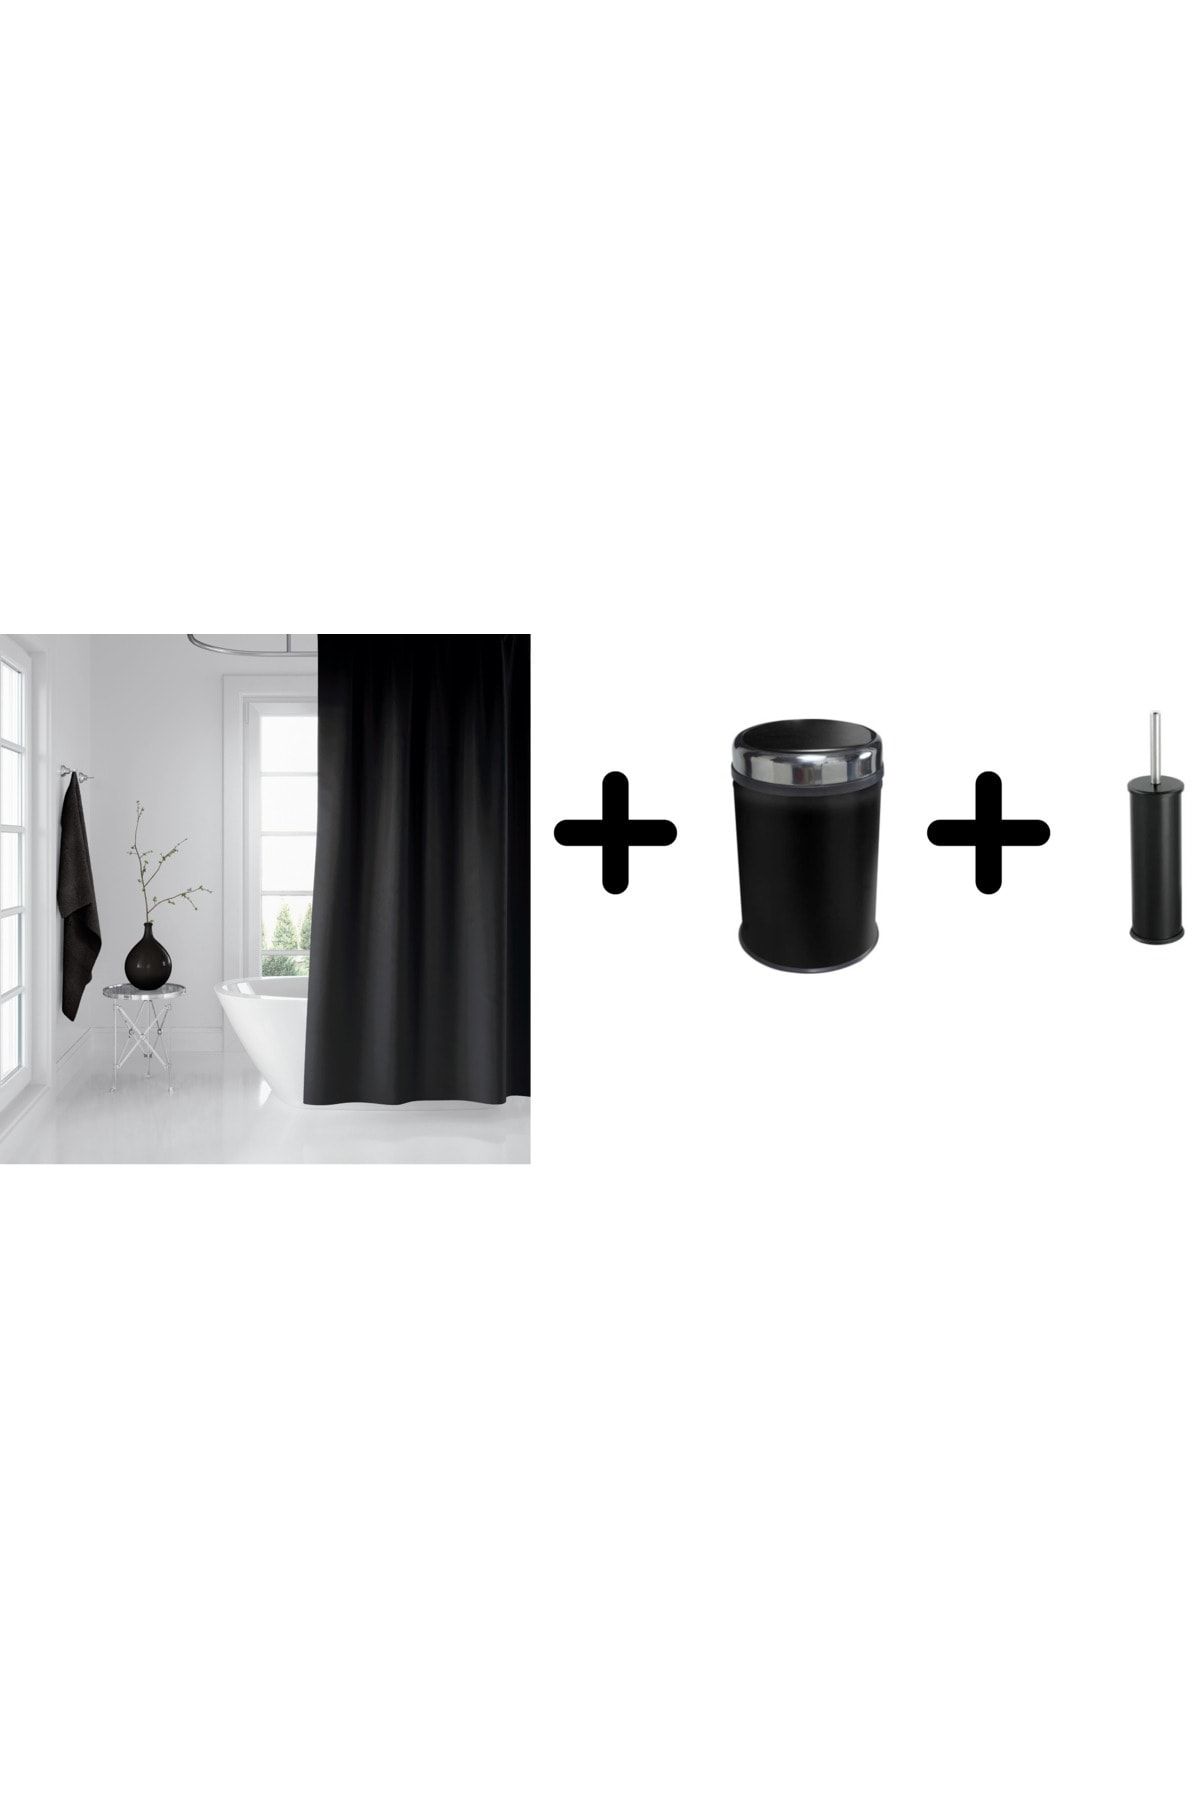 Zethome Banyo Duş Perdesi Siyah Çift Kanat Pratik Kapak 5 Lt Çöp Kovası Ve Tuvalet Fırçası Set